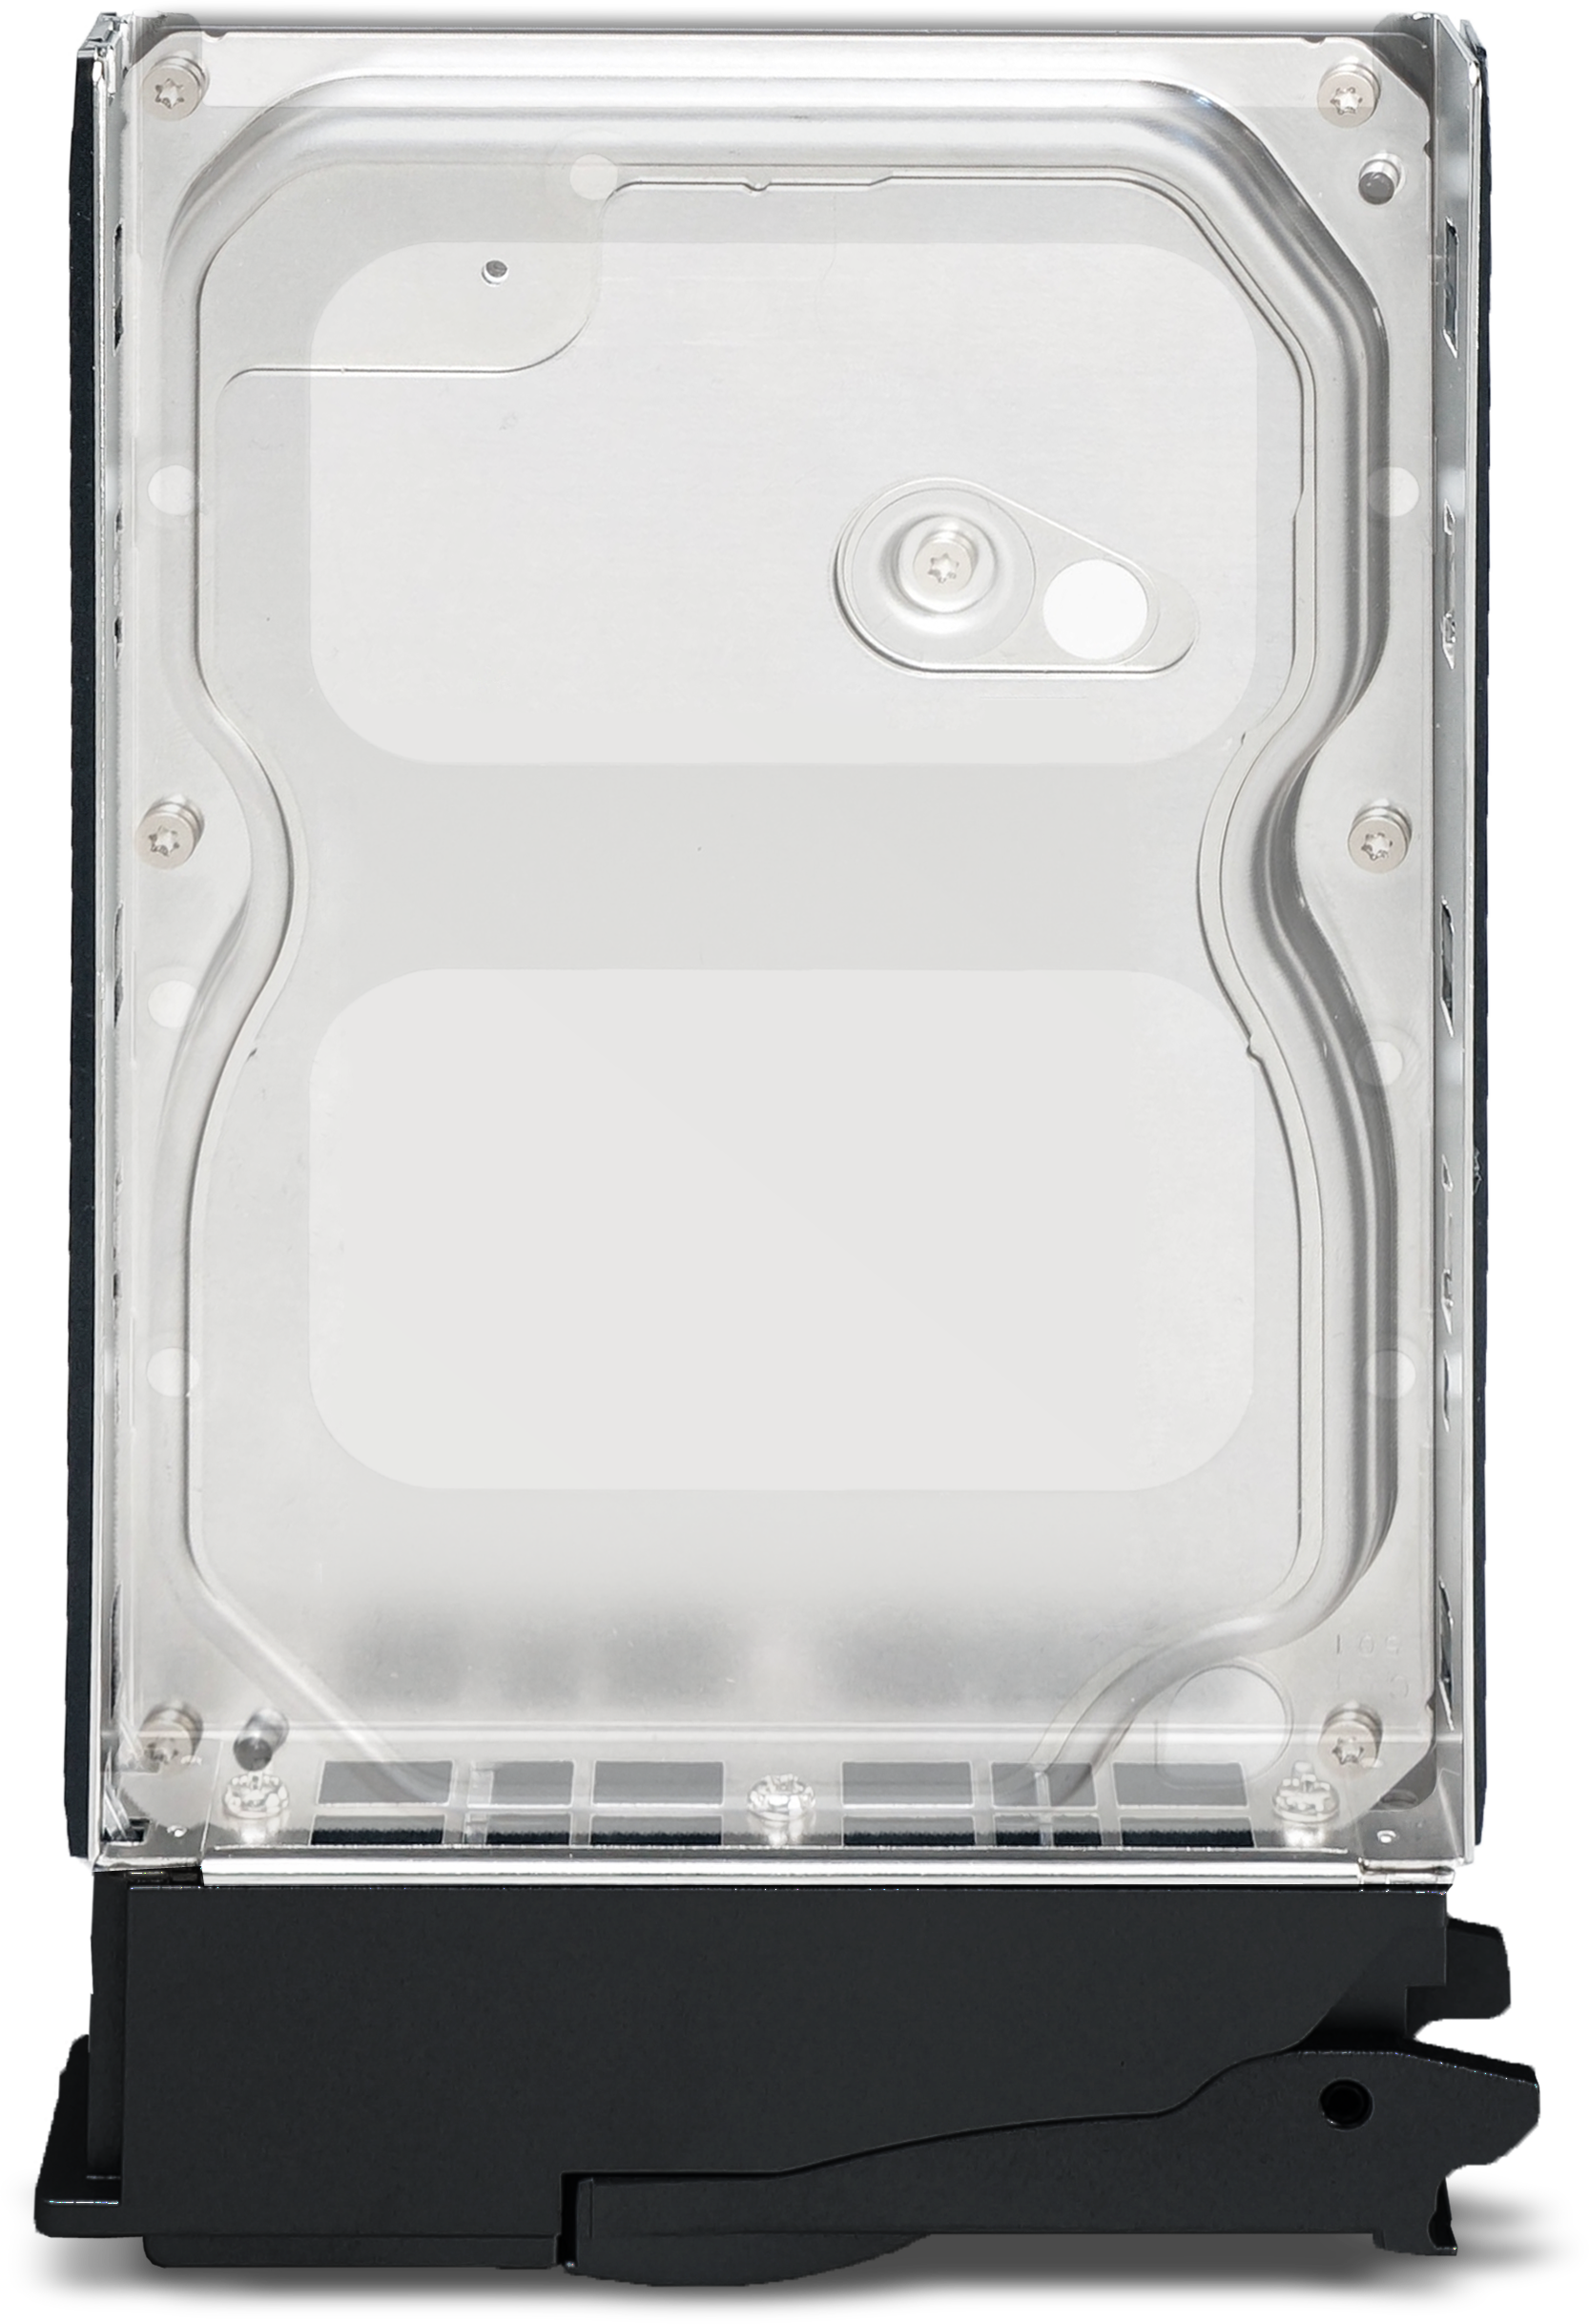 2.5 or 3.5-inch hard drive tray